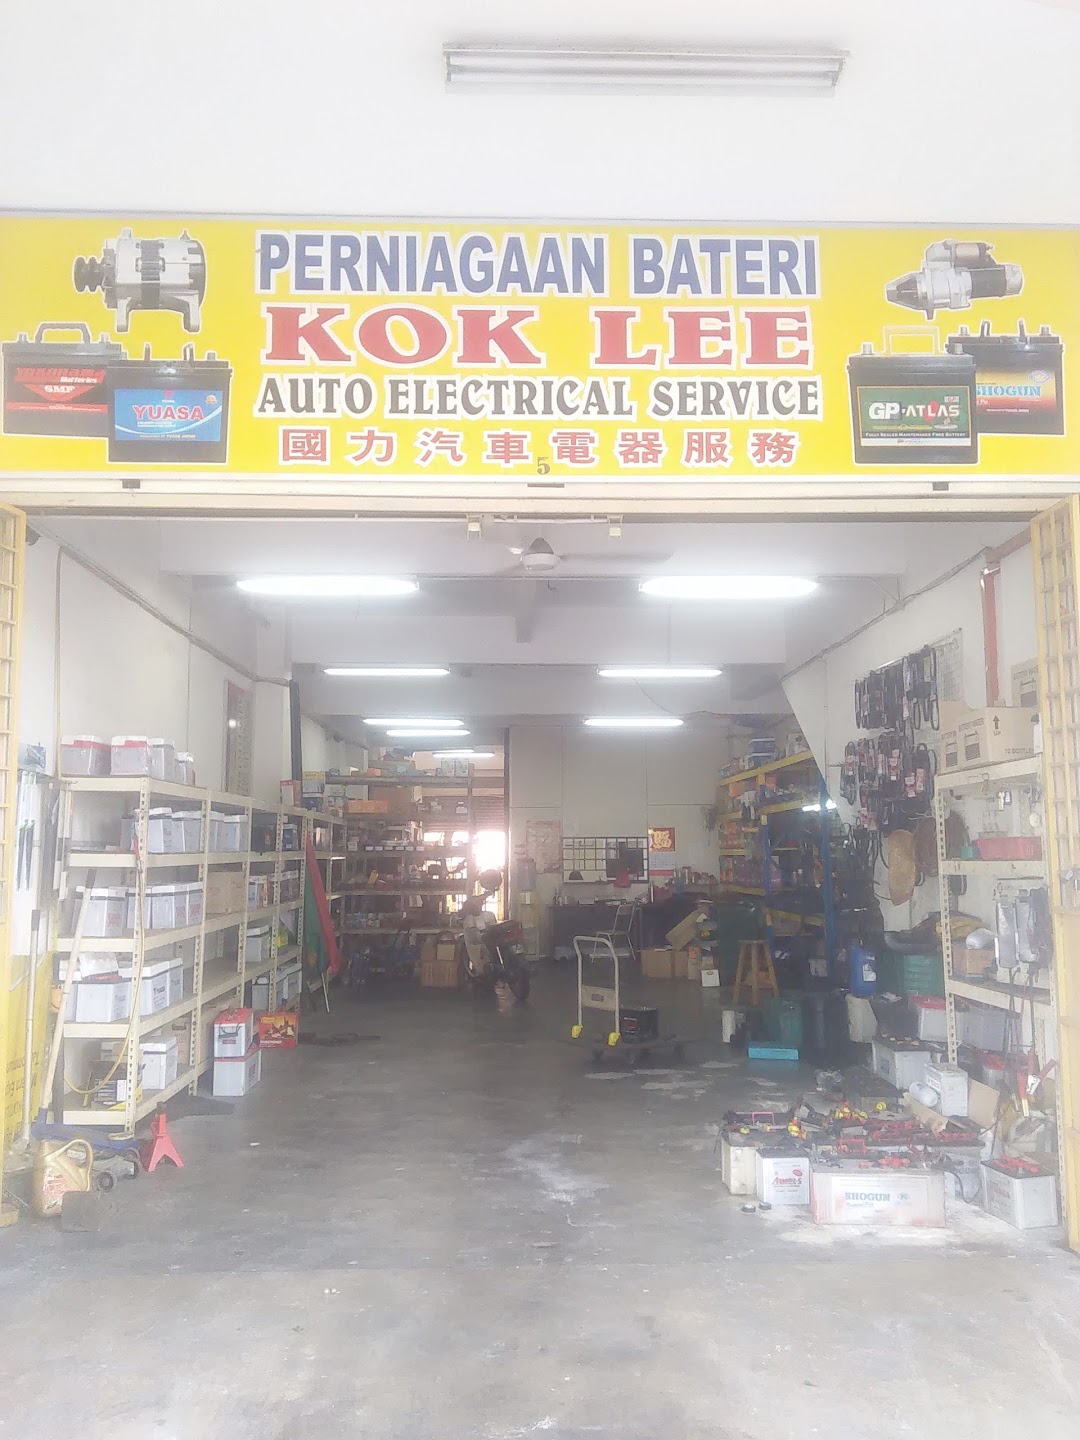 Kok Lee Auto Electrical Service